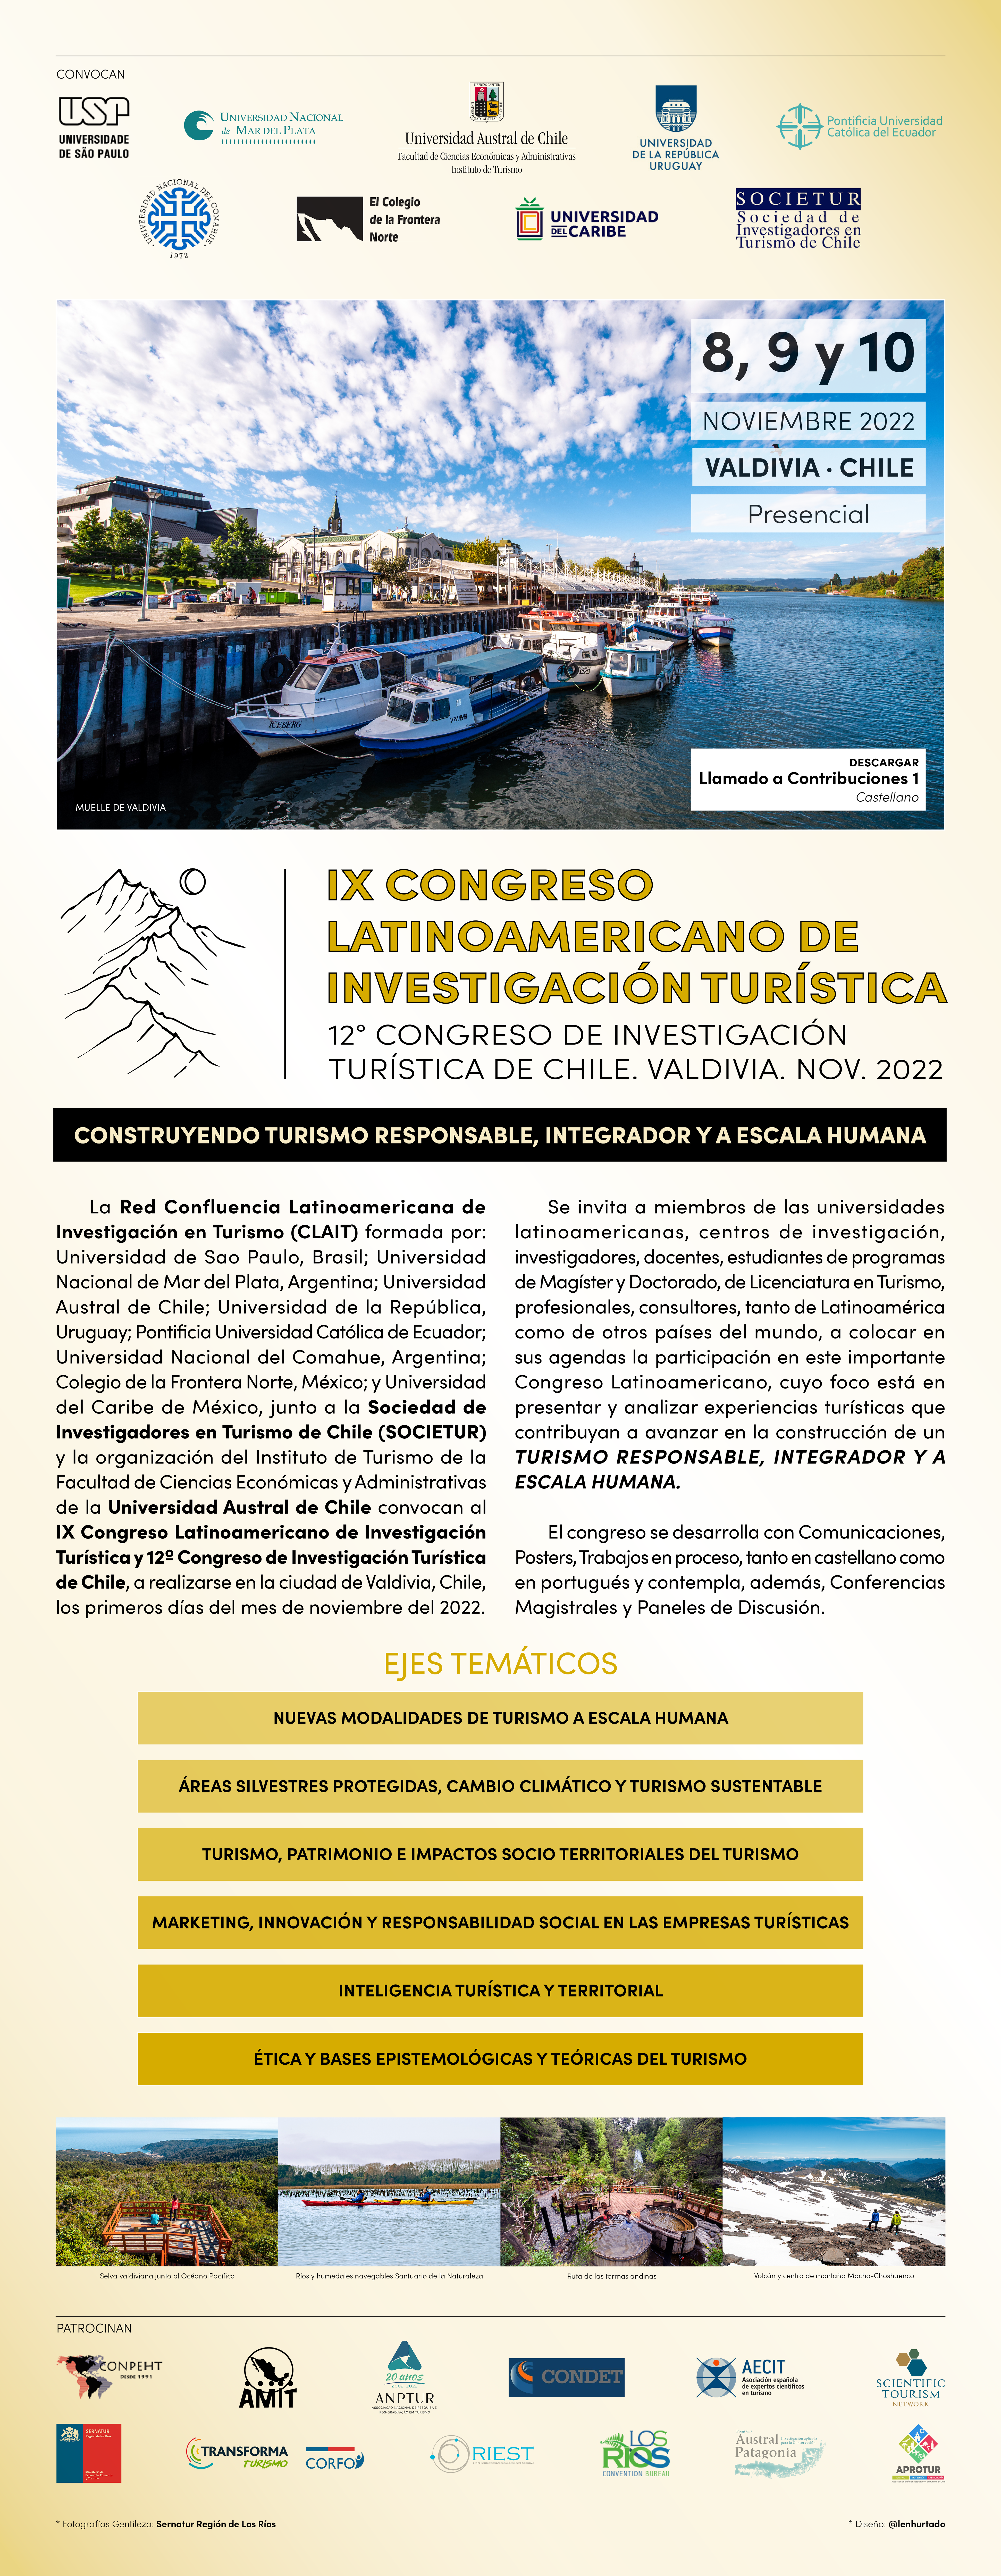 IX CONGRESO LATINOAMERICANO DE INVESTIGACIÓN TURÍSTICA